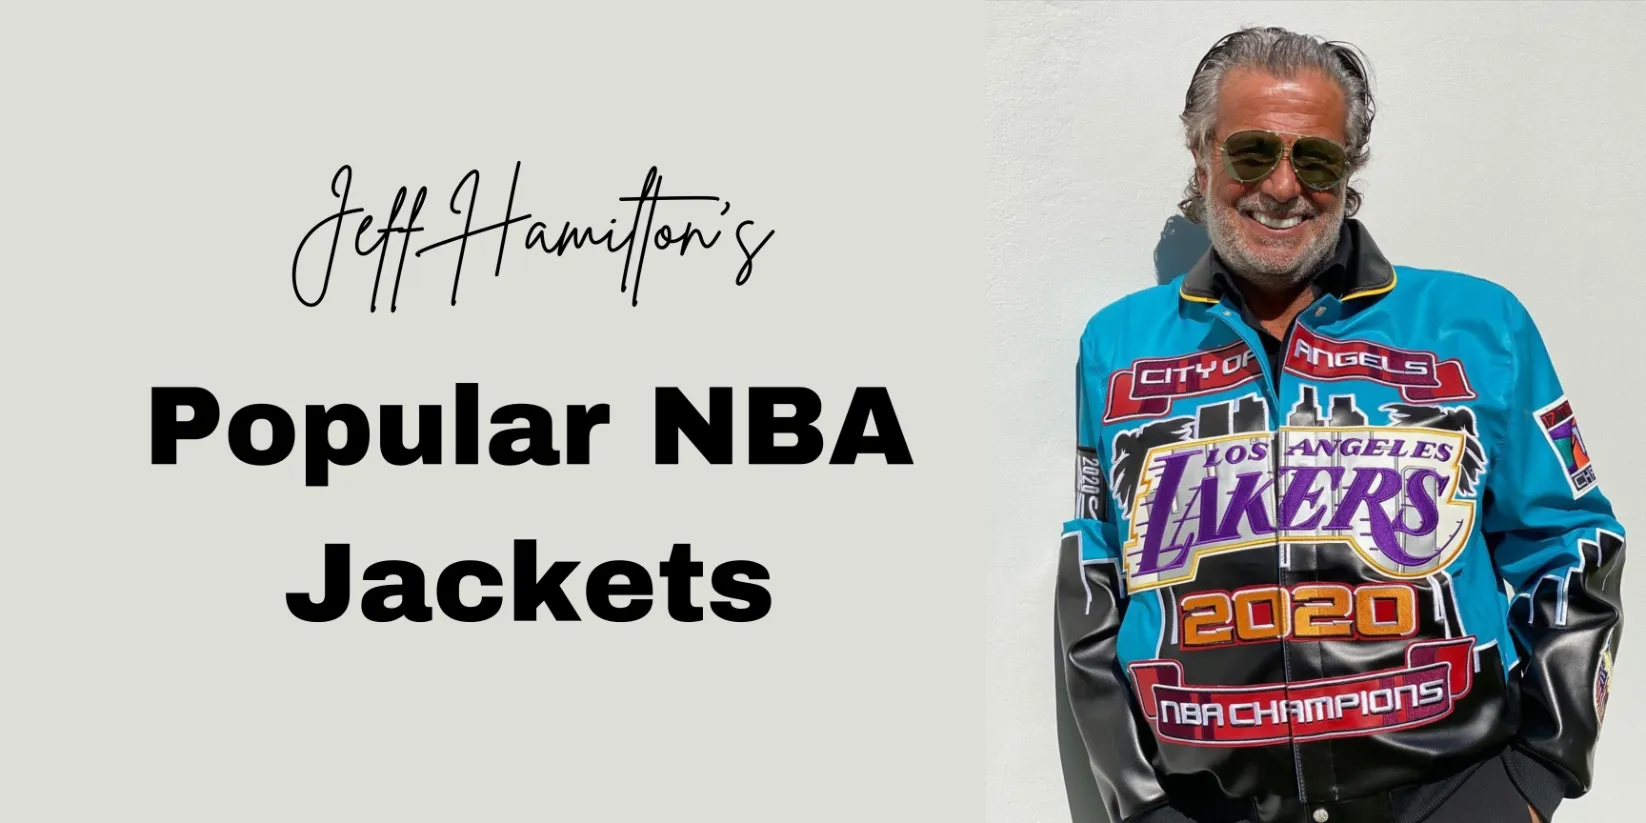 From Jordan to Kobe: everybody loves Jeff Hamilton's leather